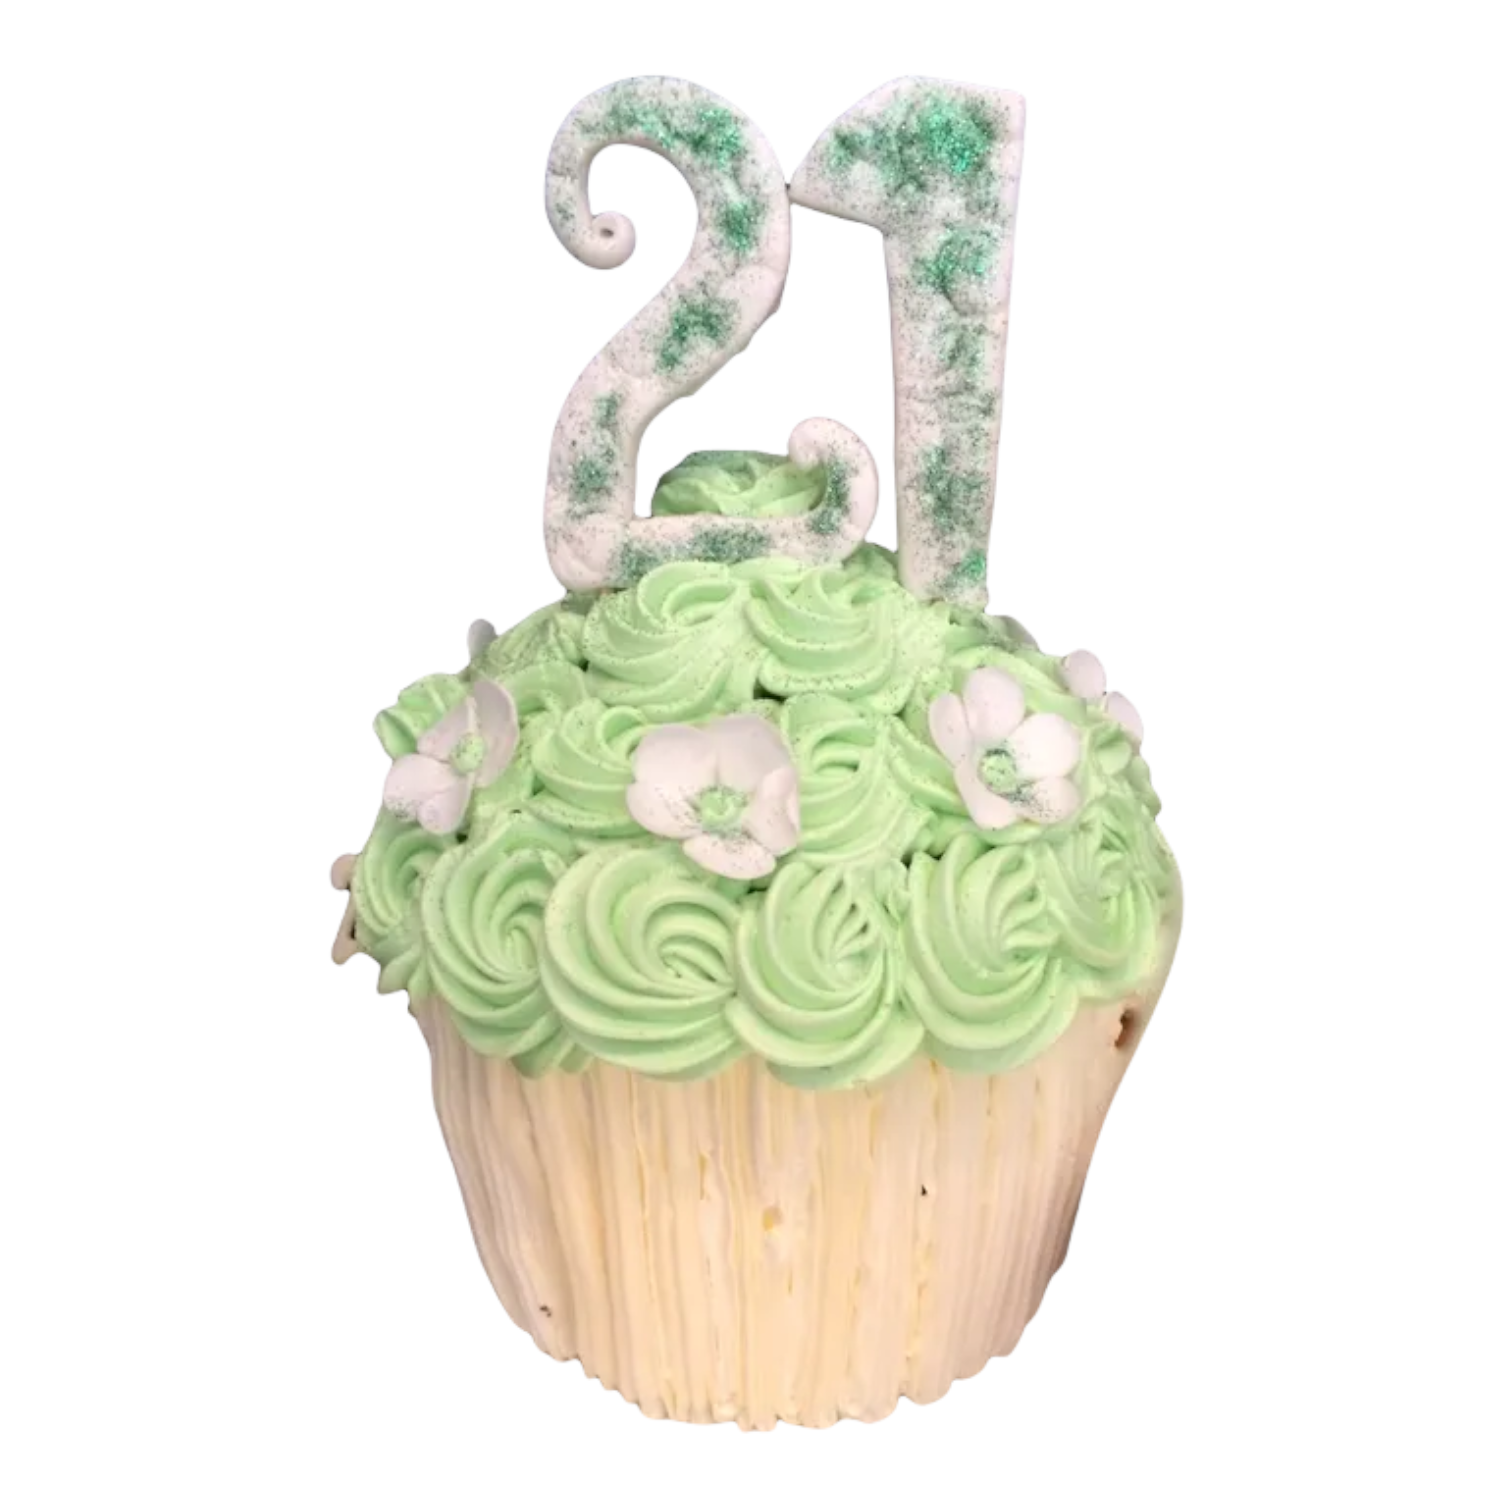 giant green twenty first birthday cake